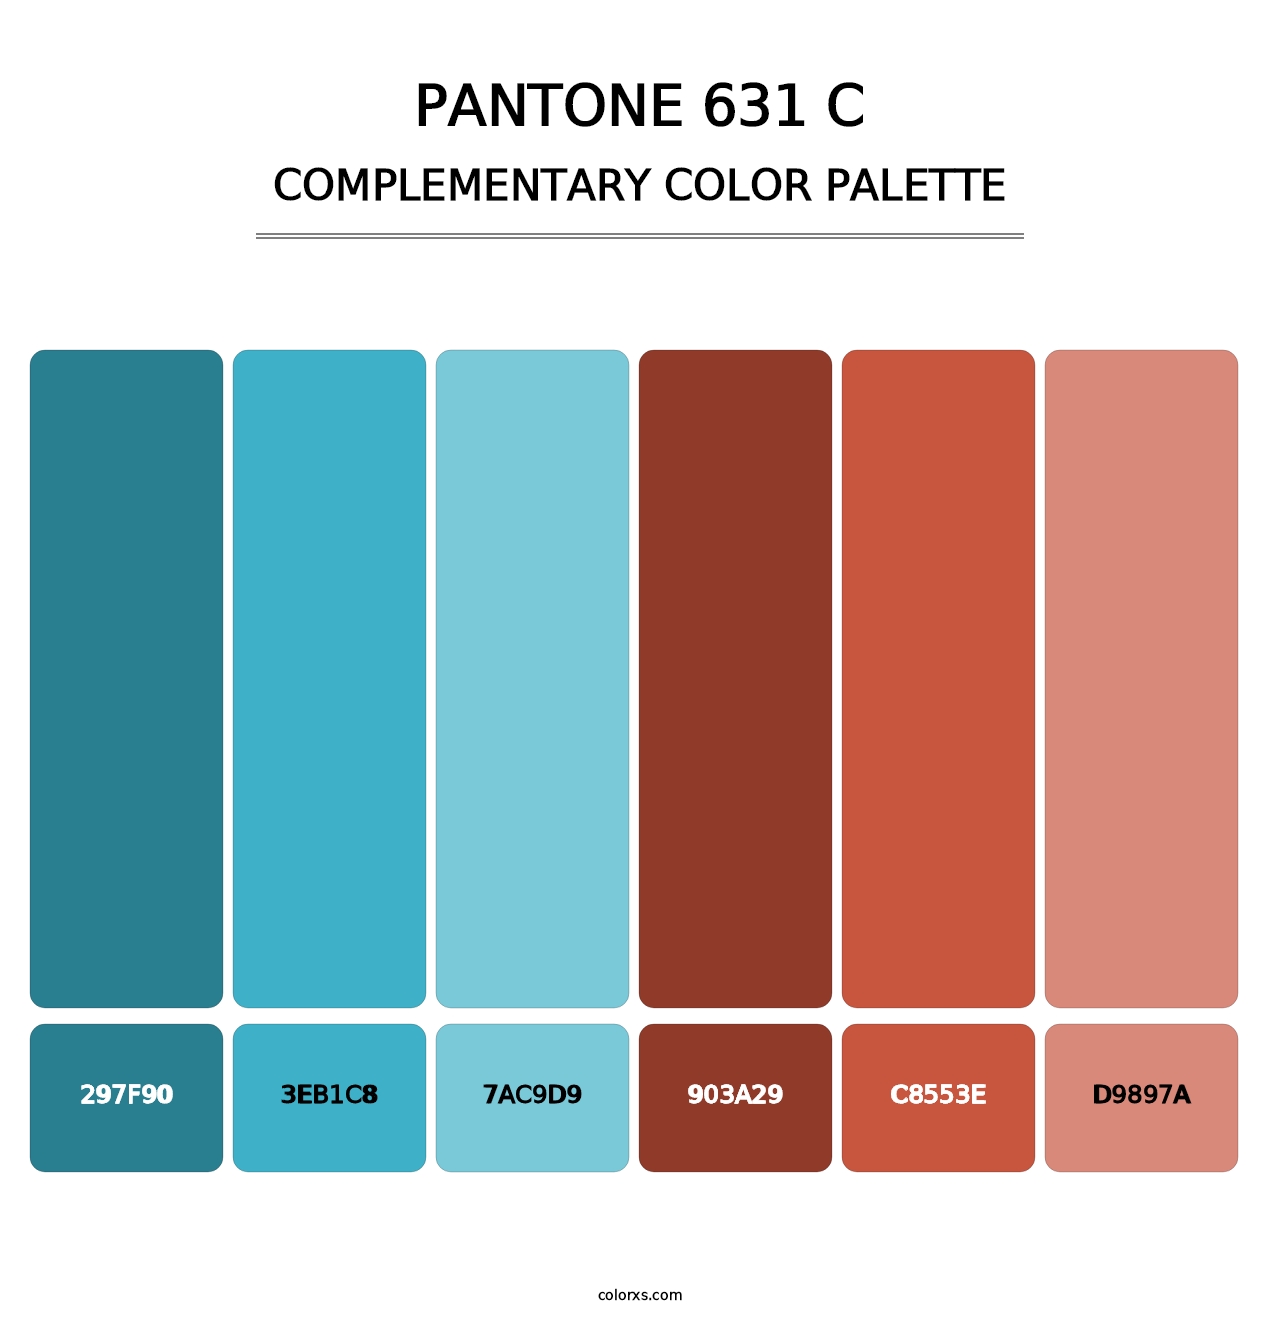 PANTONE 631 C - Complementary Color Palette